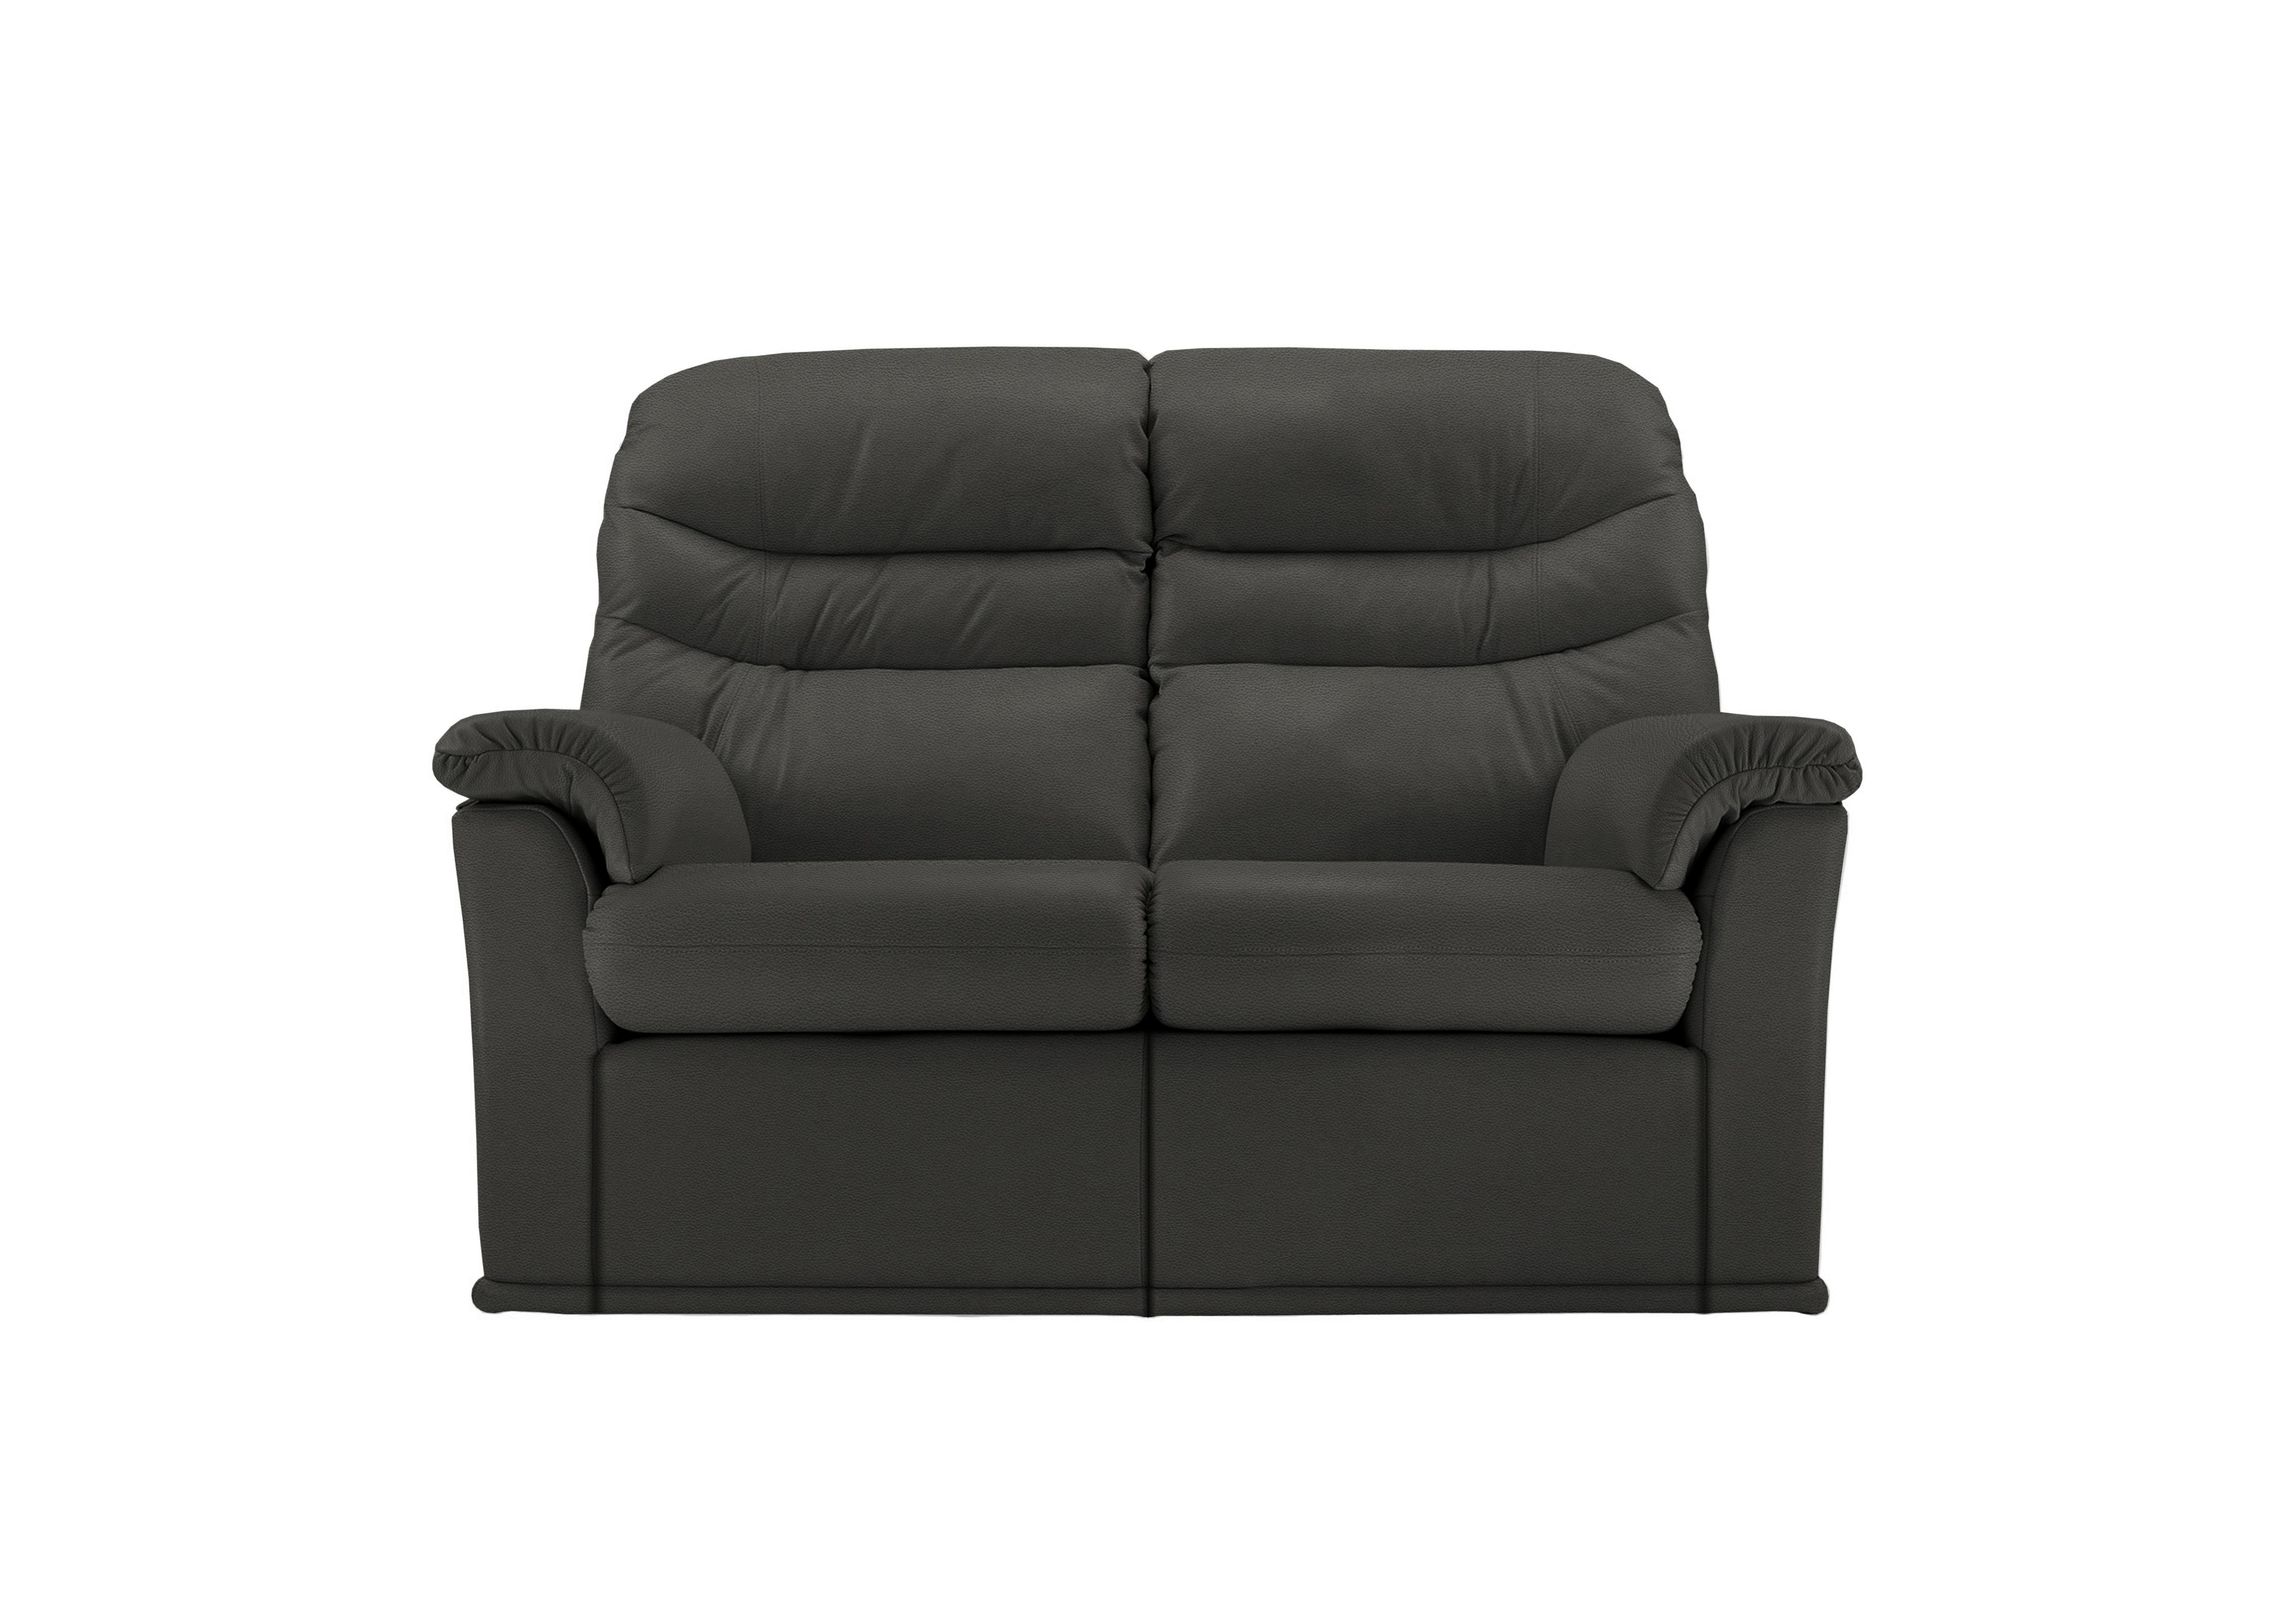 Malvern 2 Seater Leather Sofa in H004 Oxford Black on Furniture Village